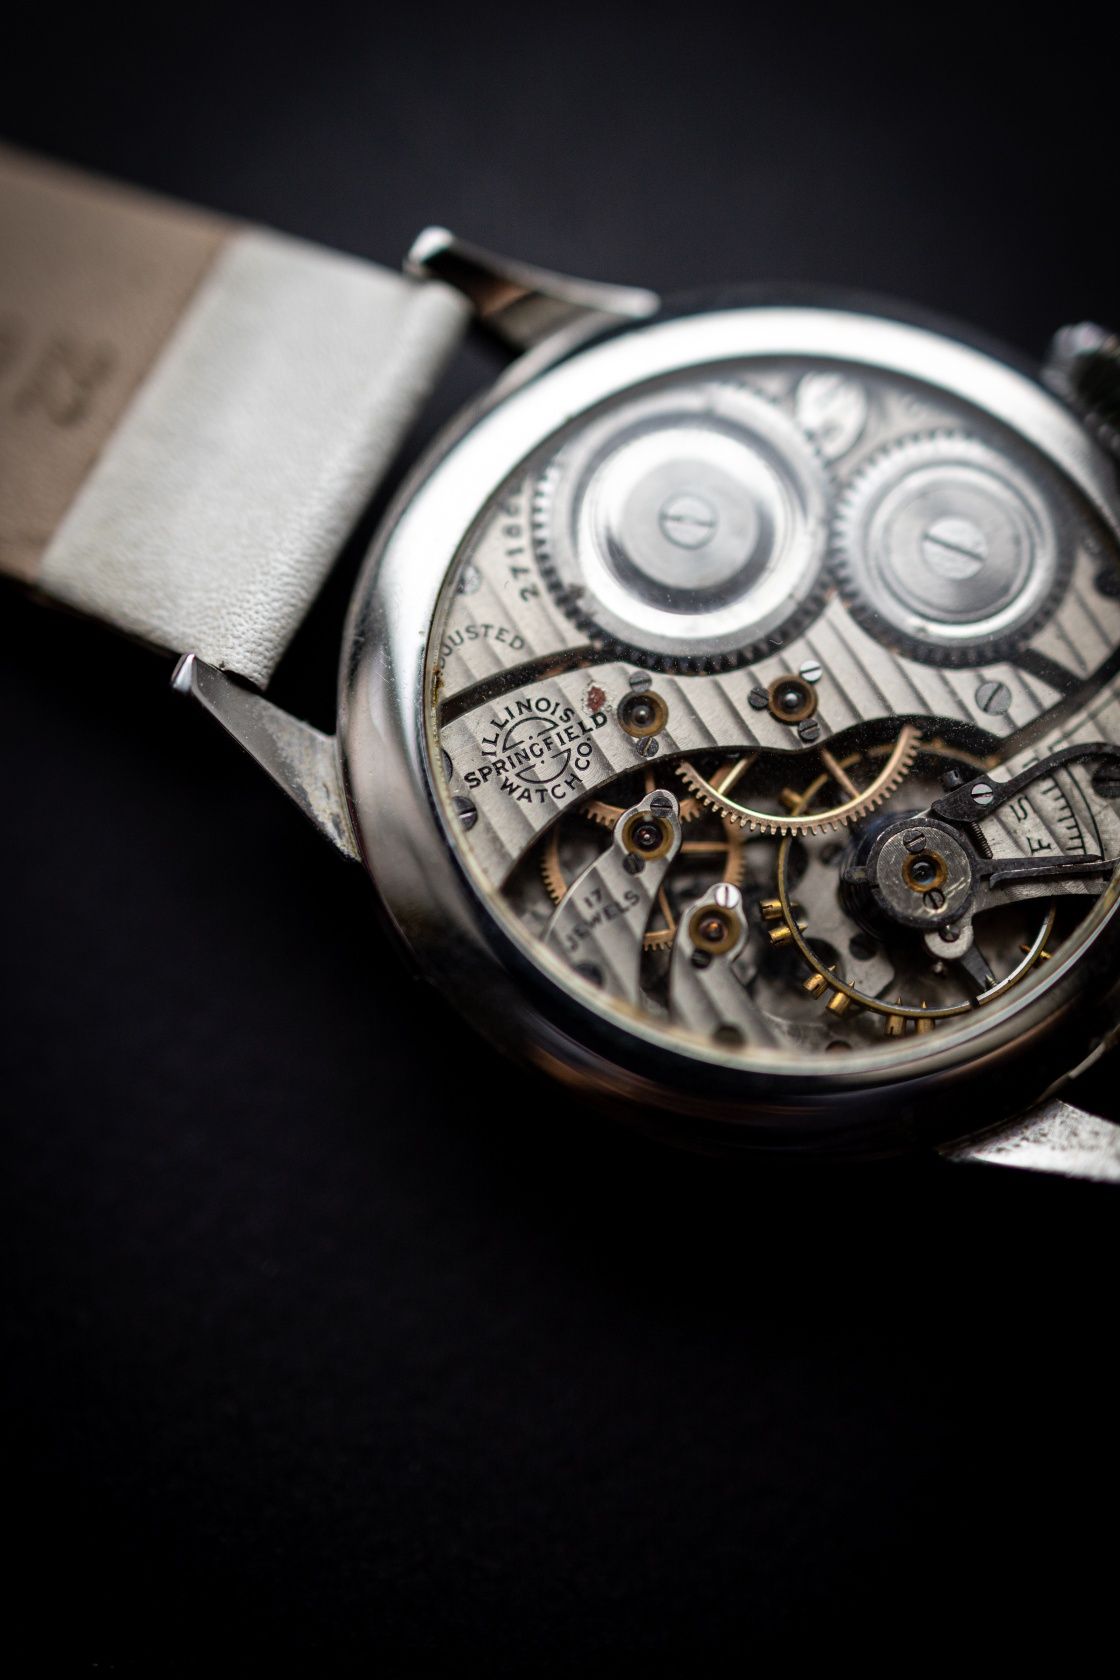 Годинник Illinois Watch Company марьяж раритет часы наручний антик